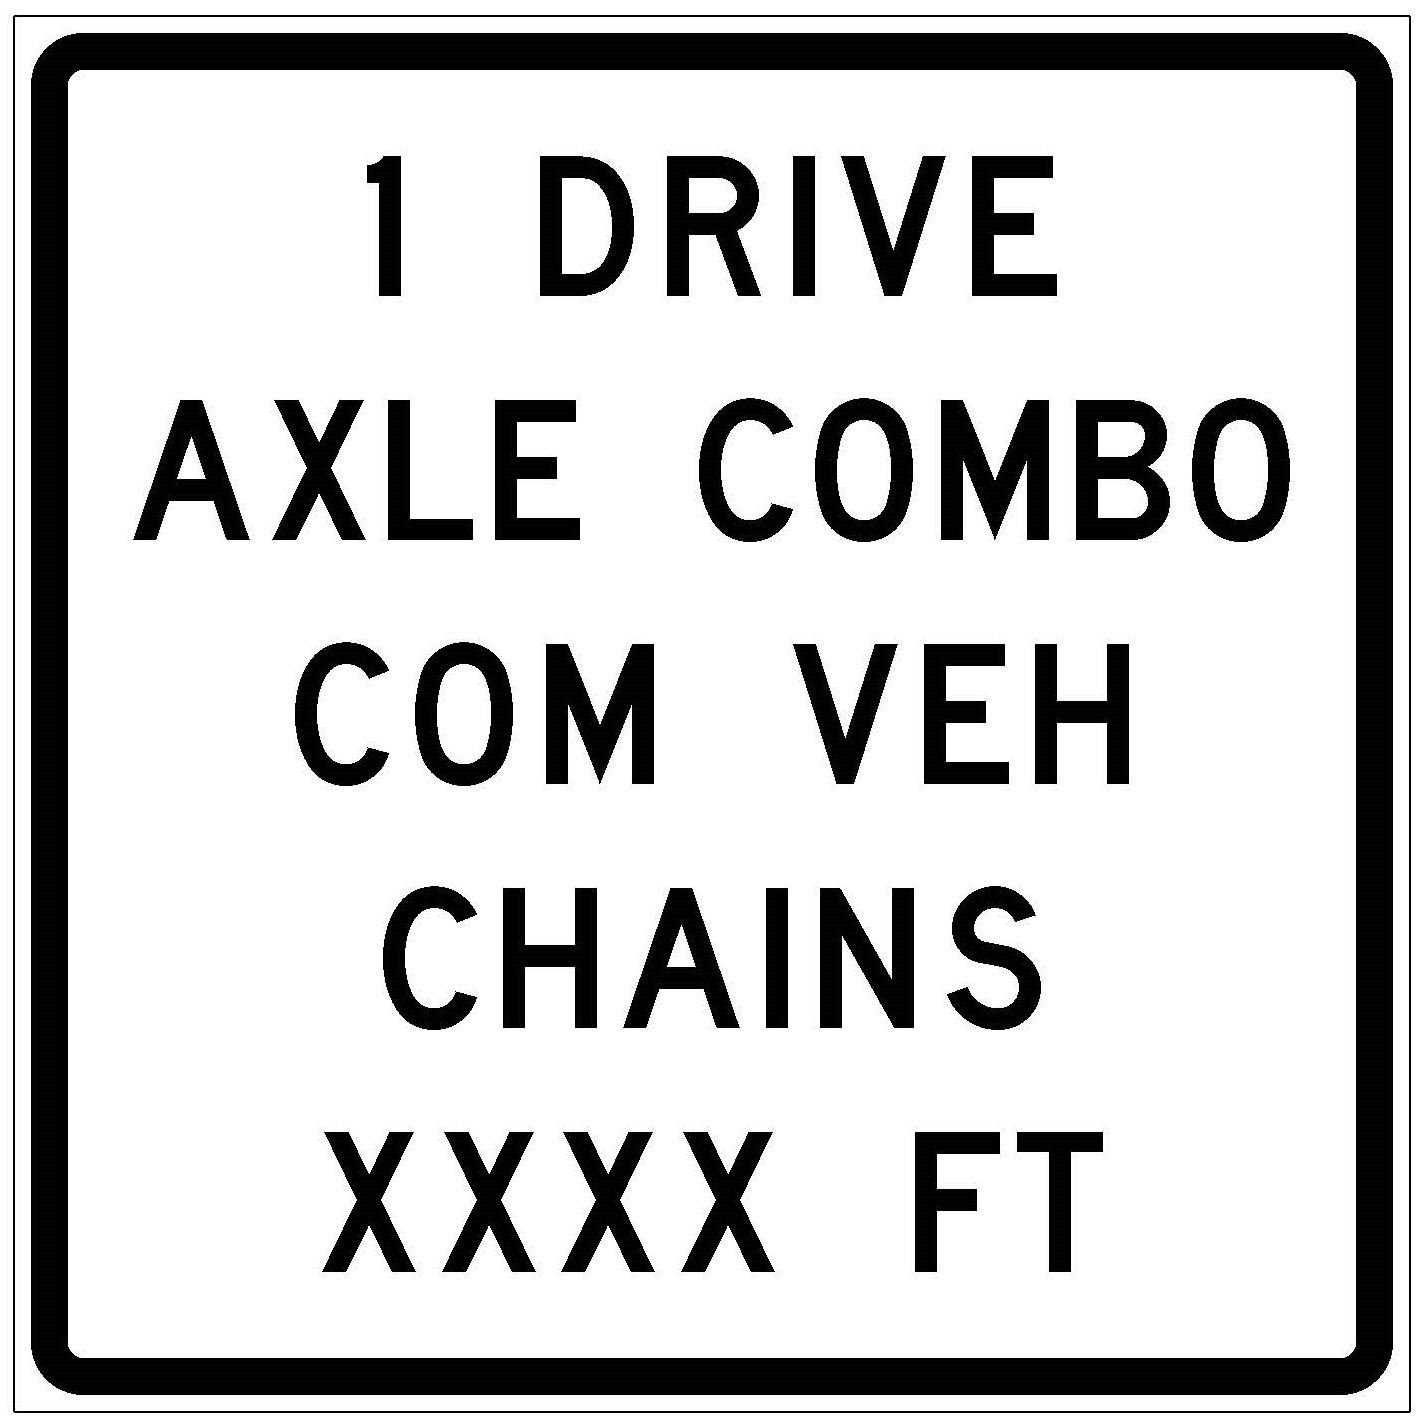 R52-10 1 Drive Axle Combo Com Veh Chains JPG detail image